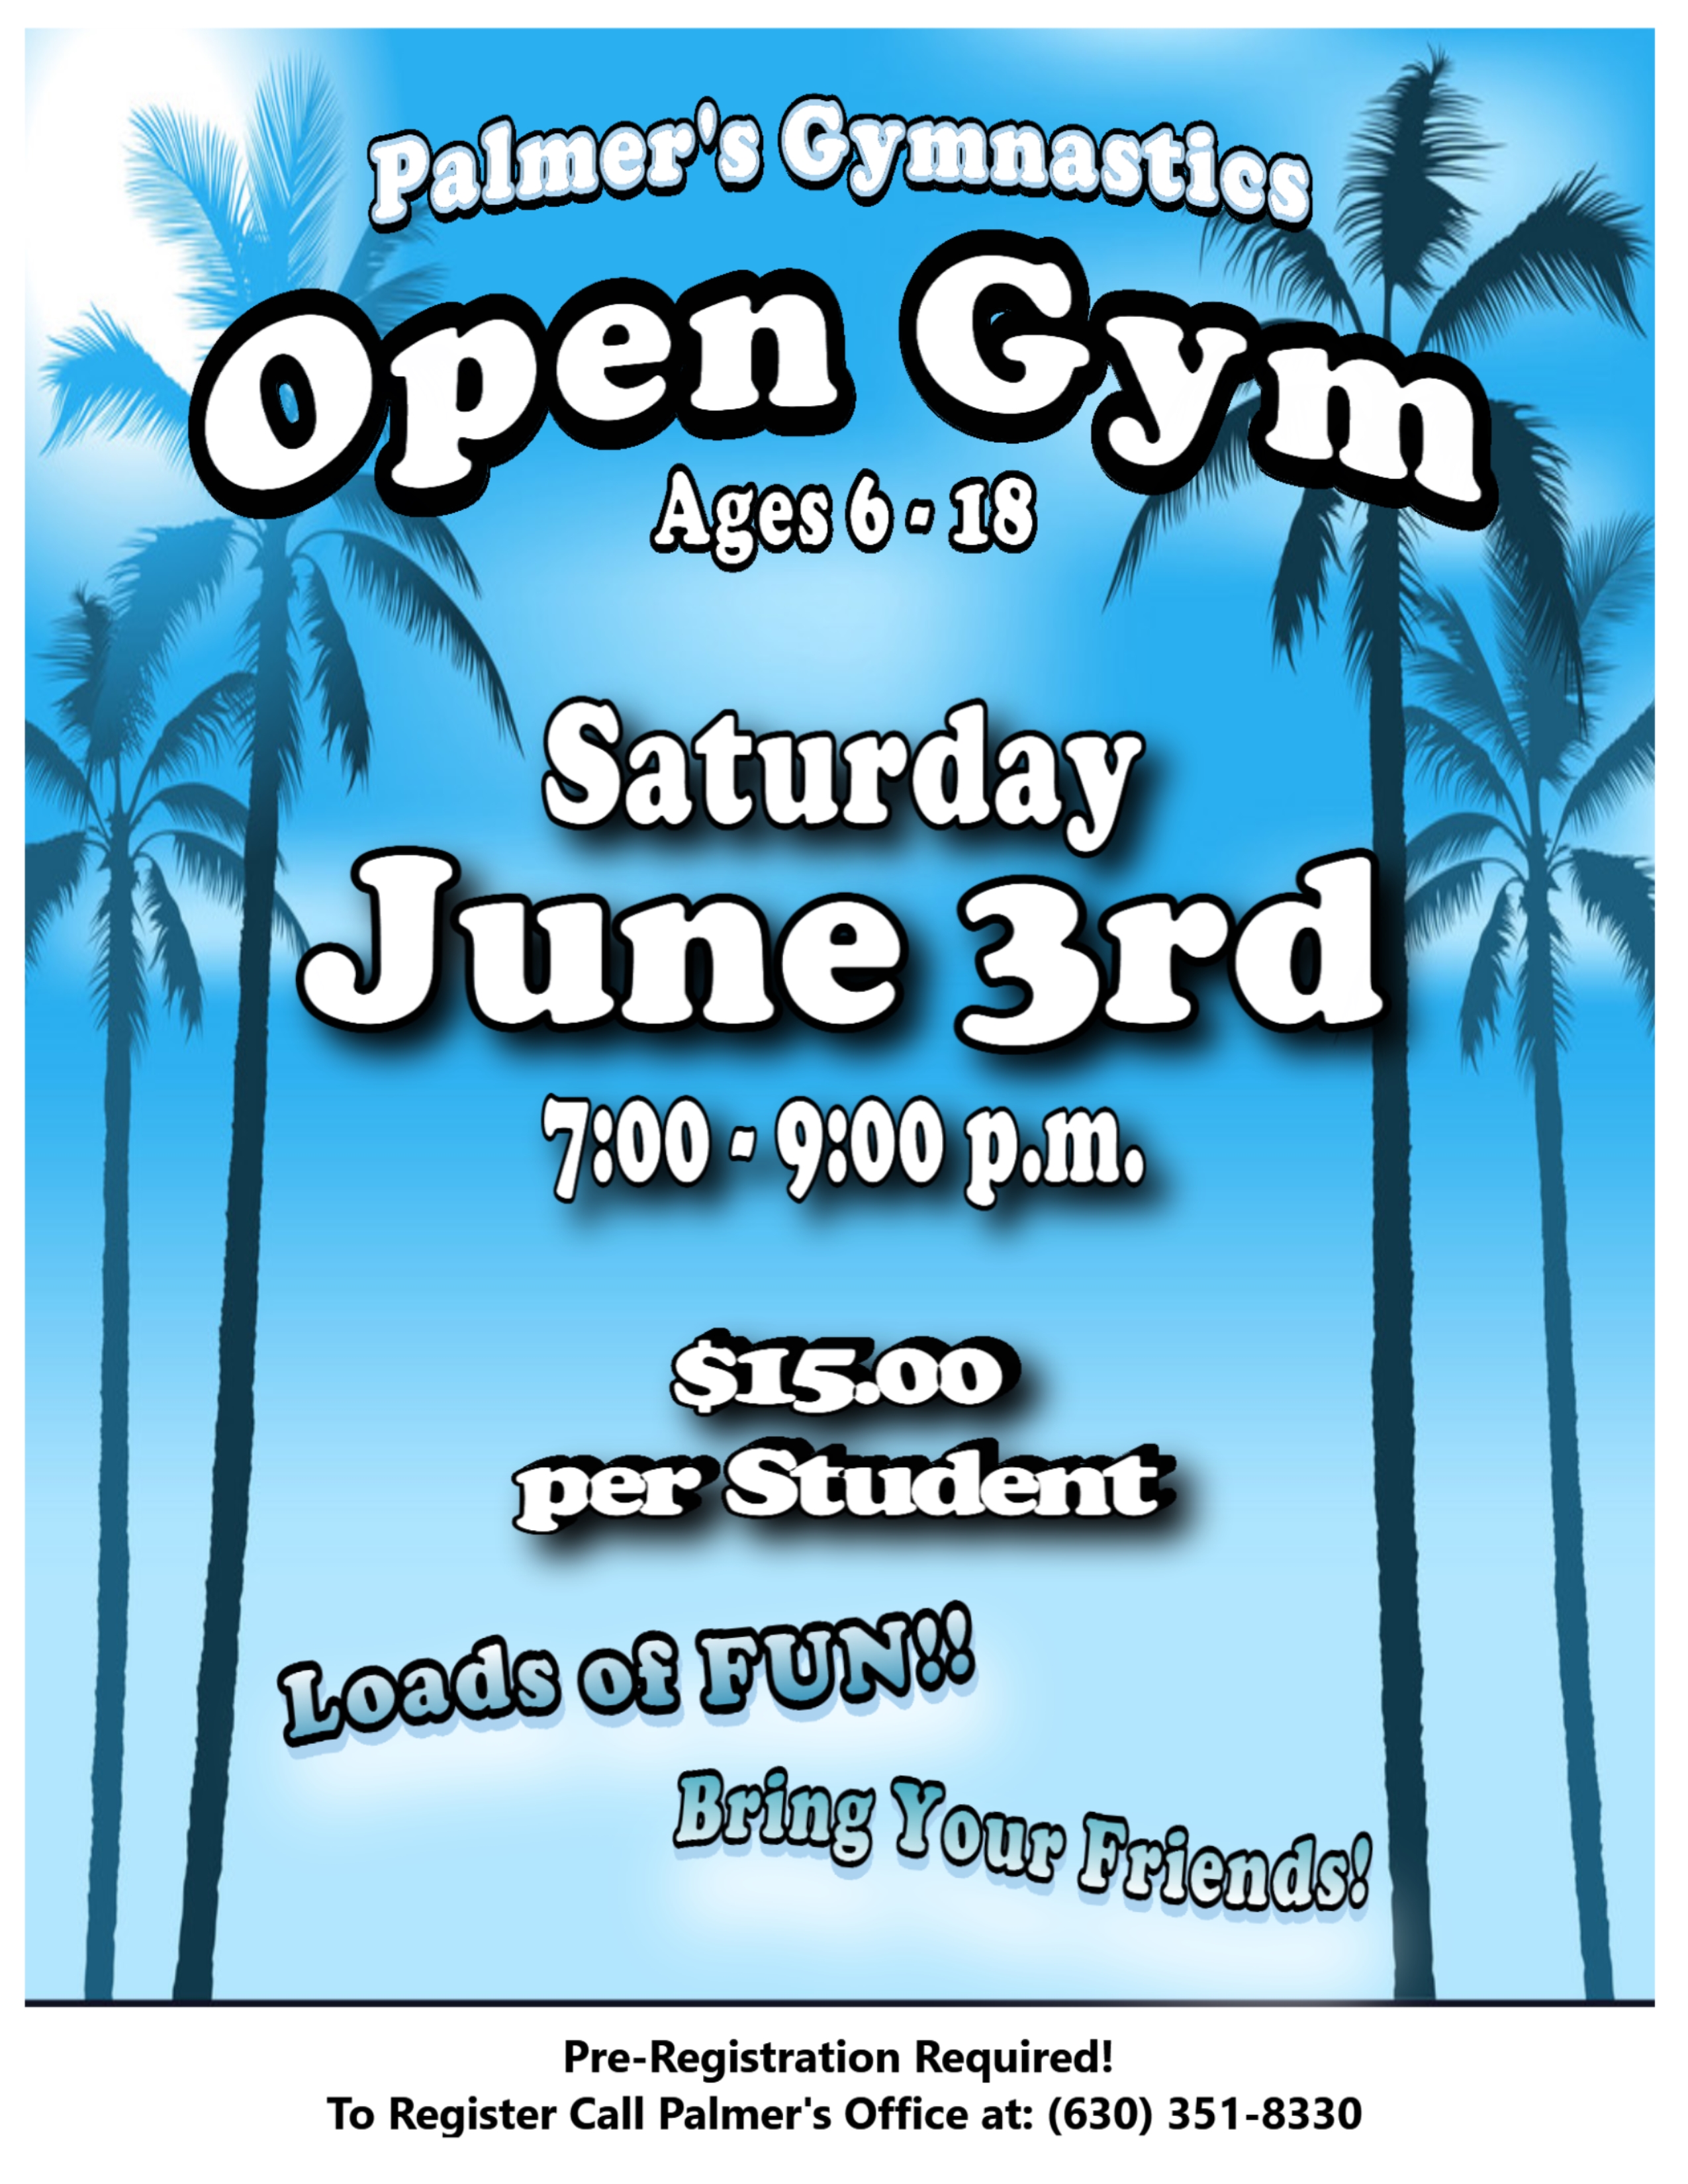 Open Gym June 3rd